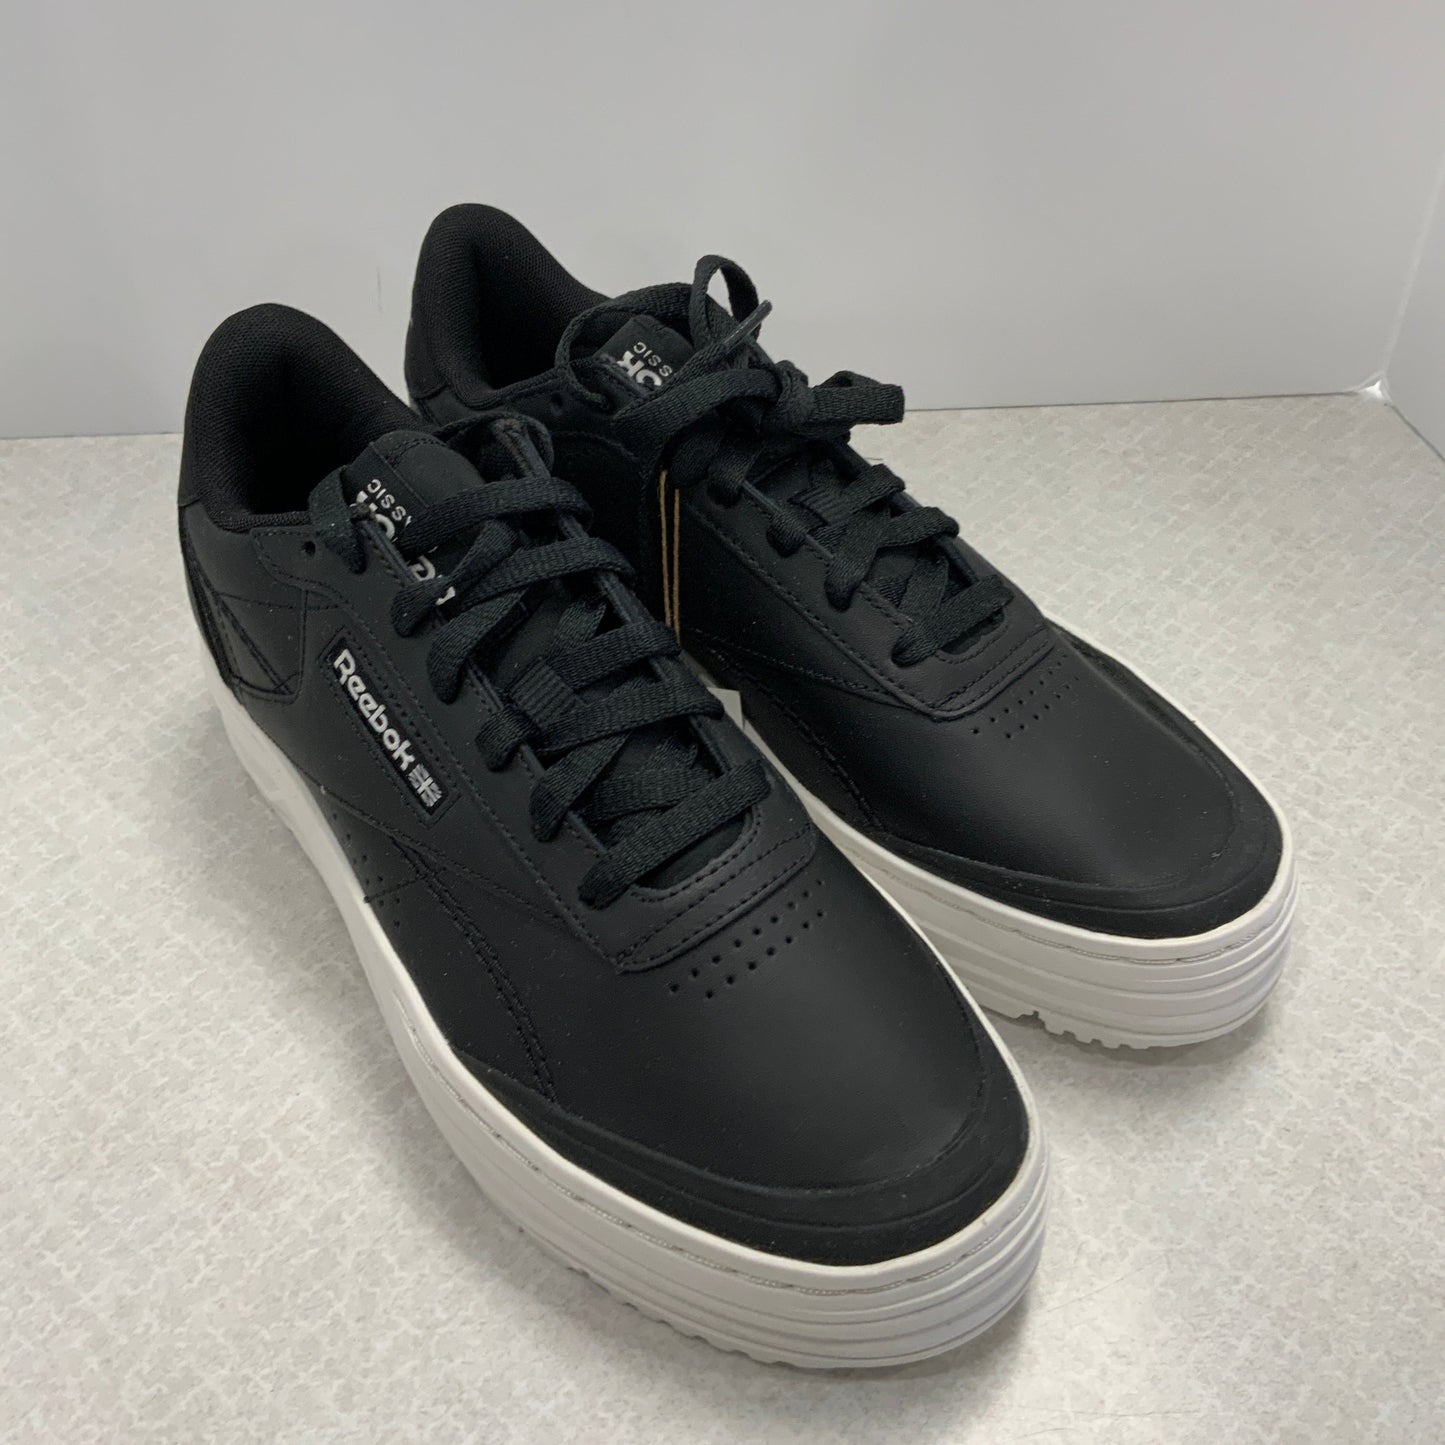 Black Shoes Sneakers Reebok, Size 11